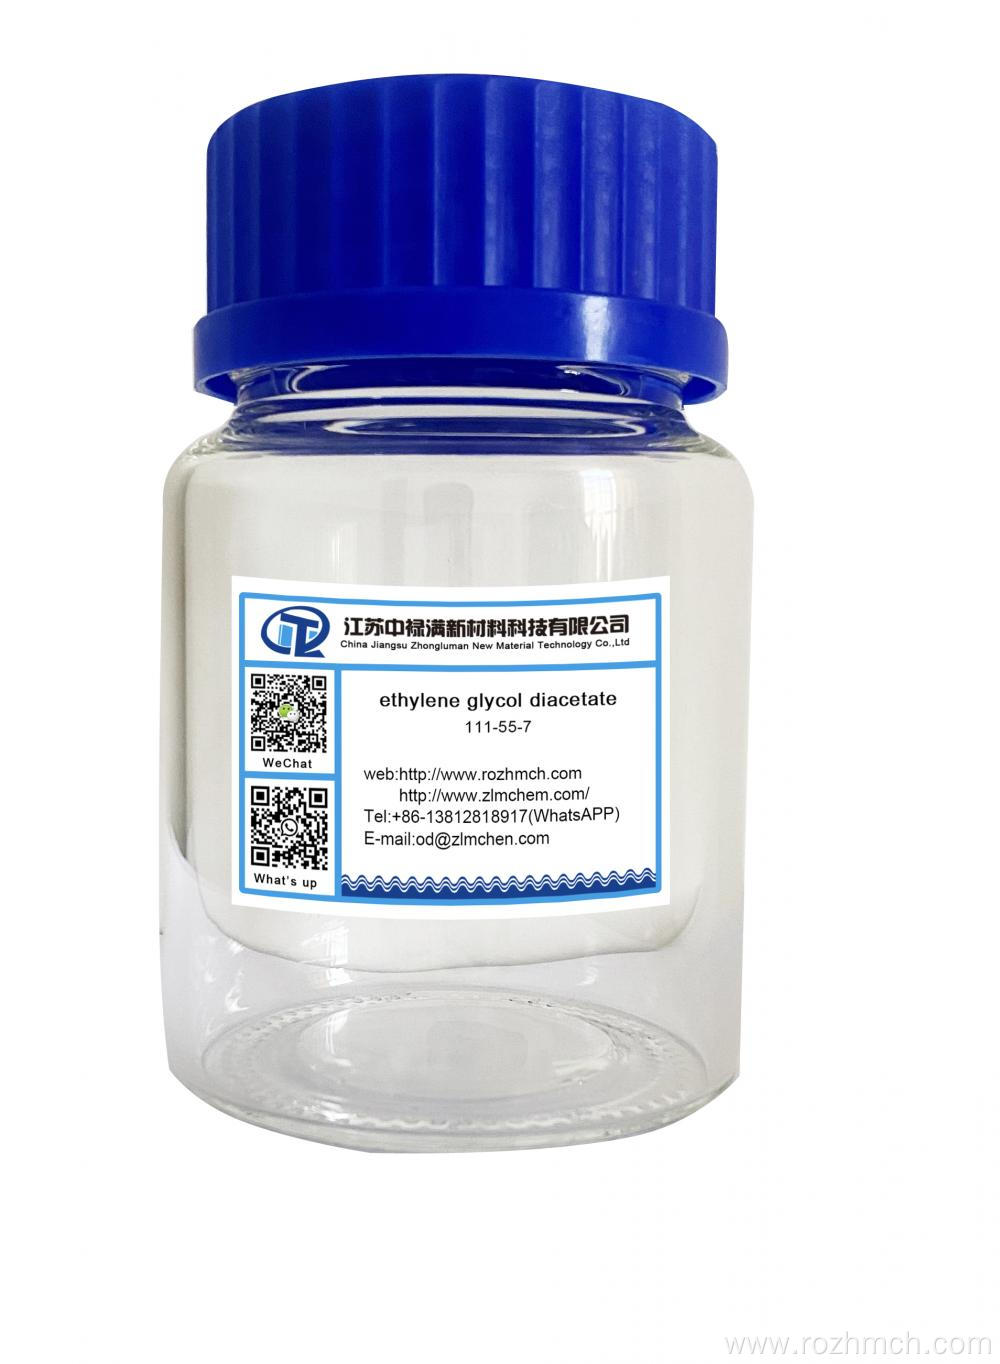 ethylene glycol diacetate cas 111-55-7